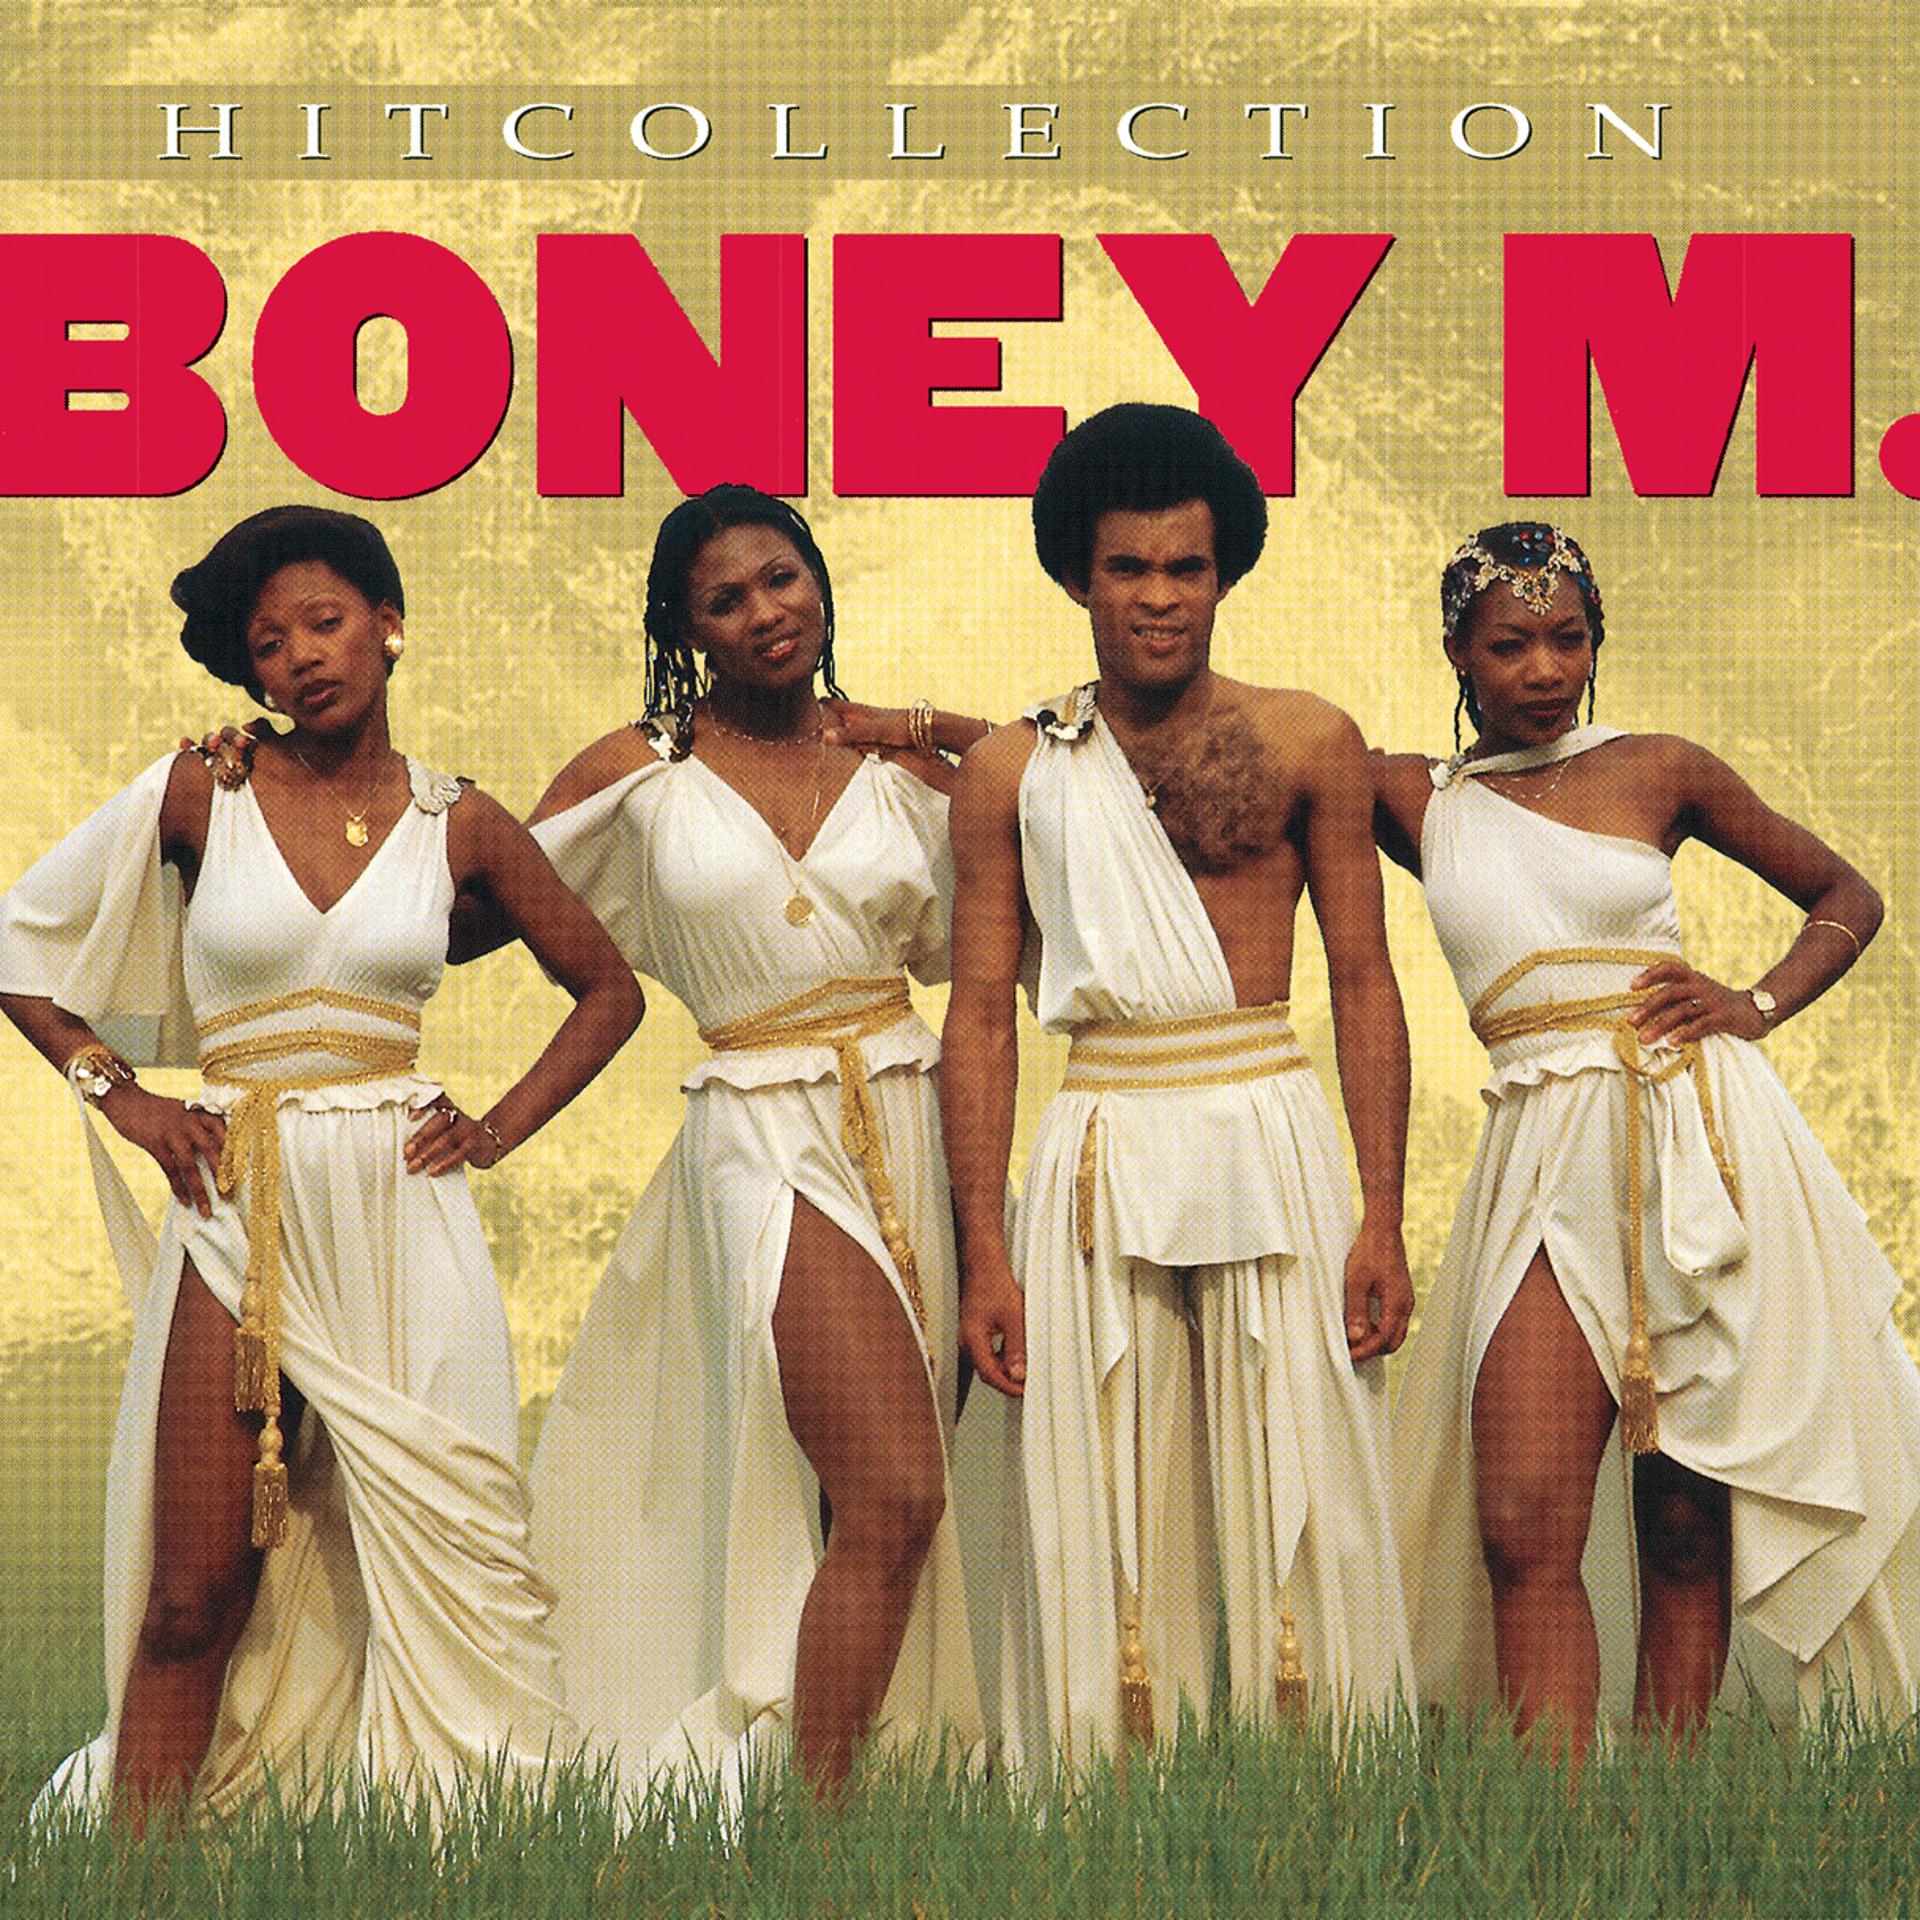 Багама мама слушать. Группа Boney m.. Группа Boney m. в 80. Бони м ма Бейкер. Группа Бони м 1976.